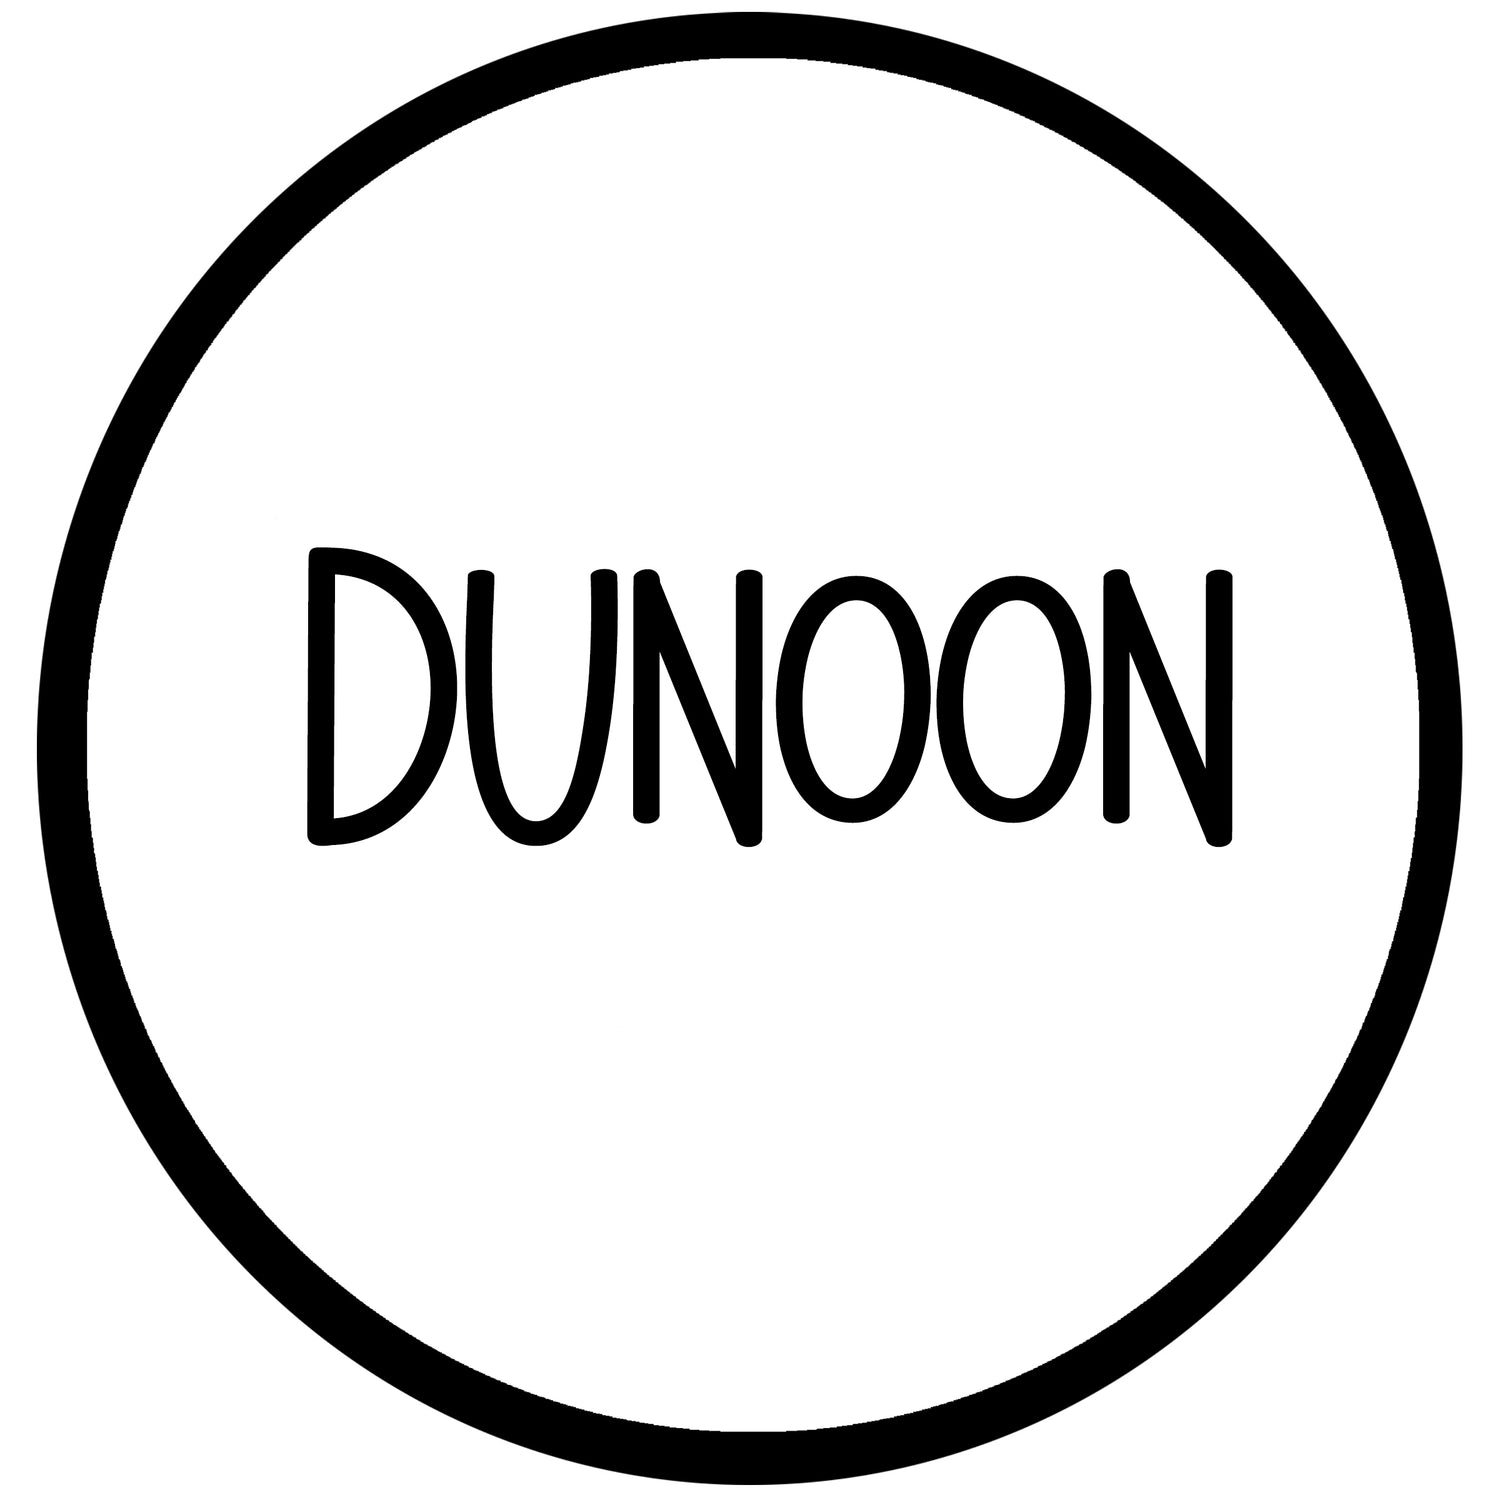 Dunoon, Argyll